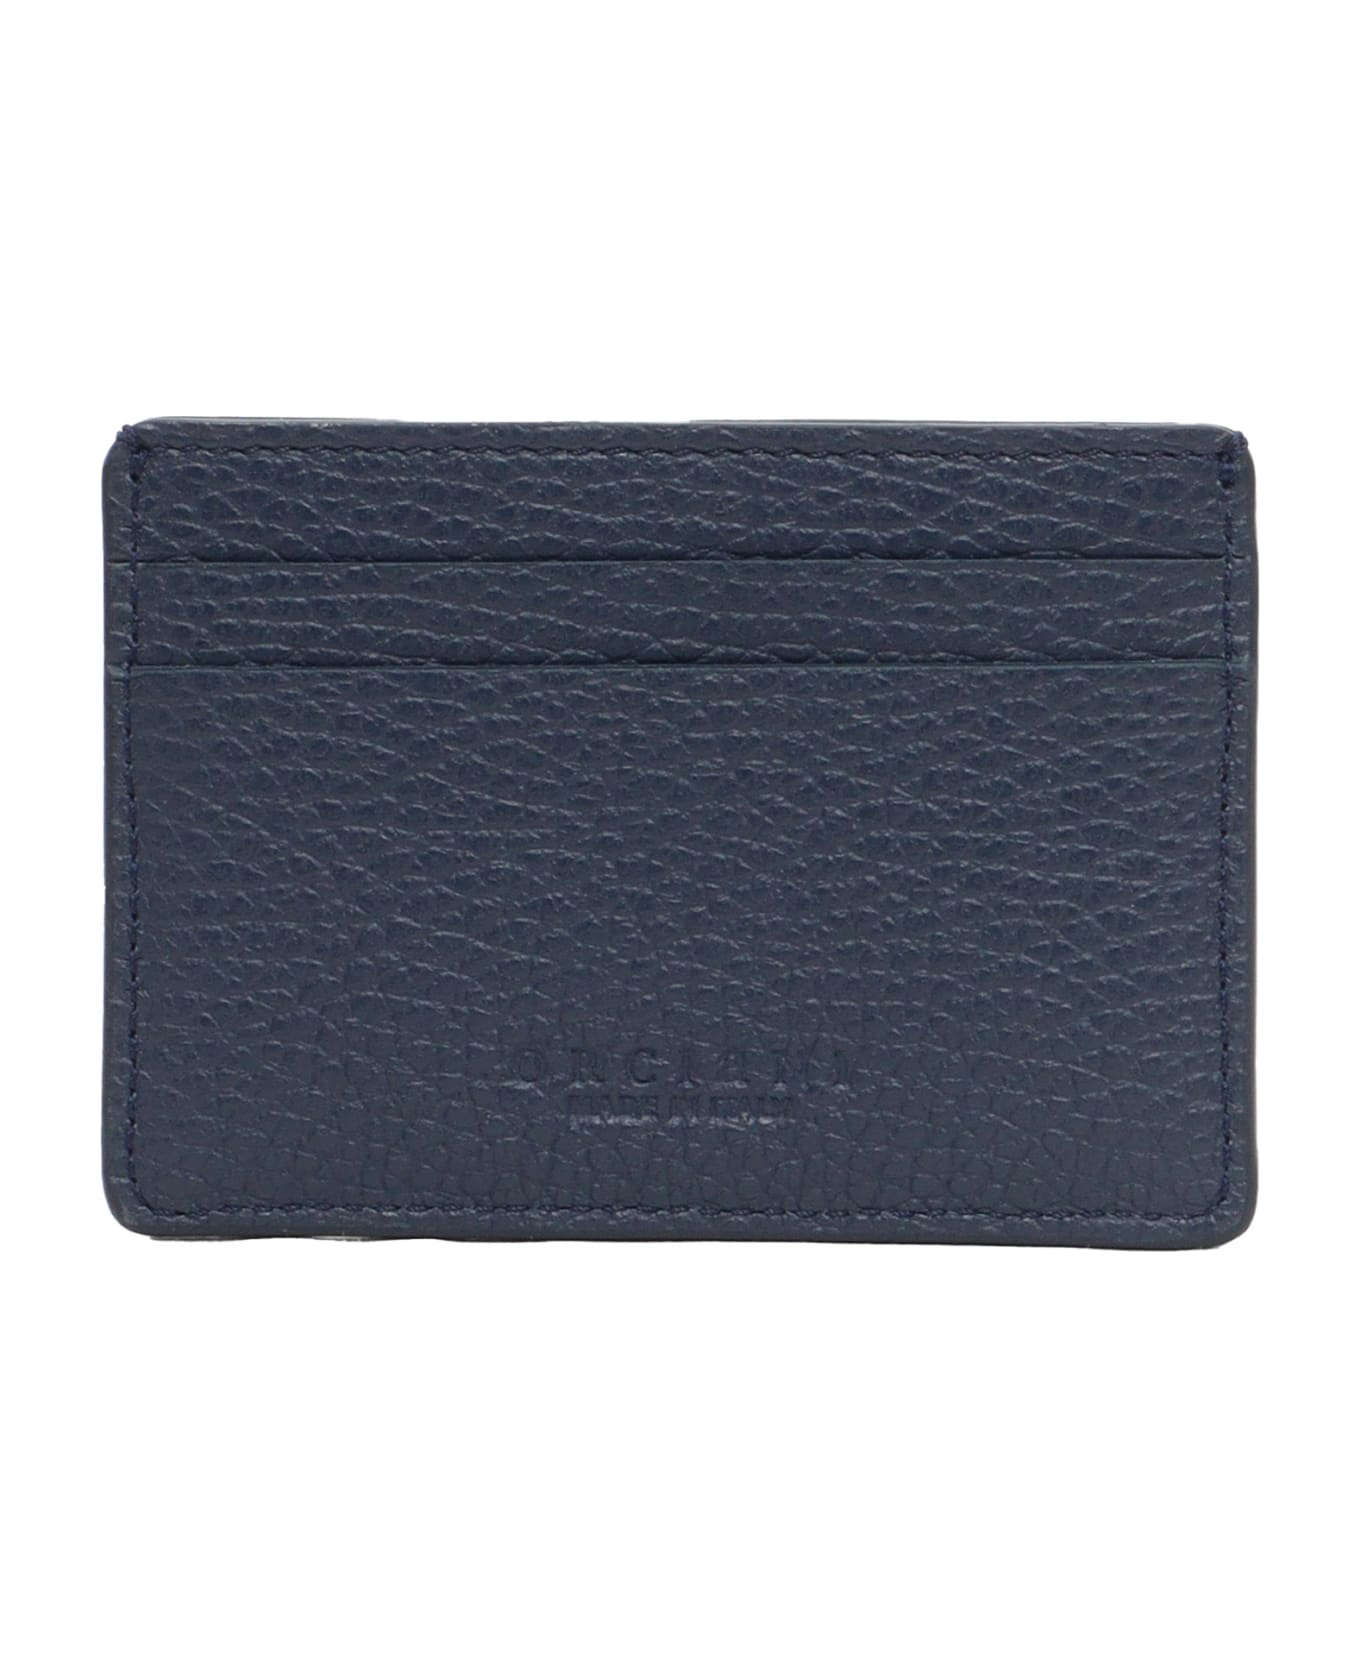 Orciani Blue Wallet - BLUE